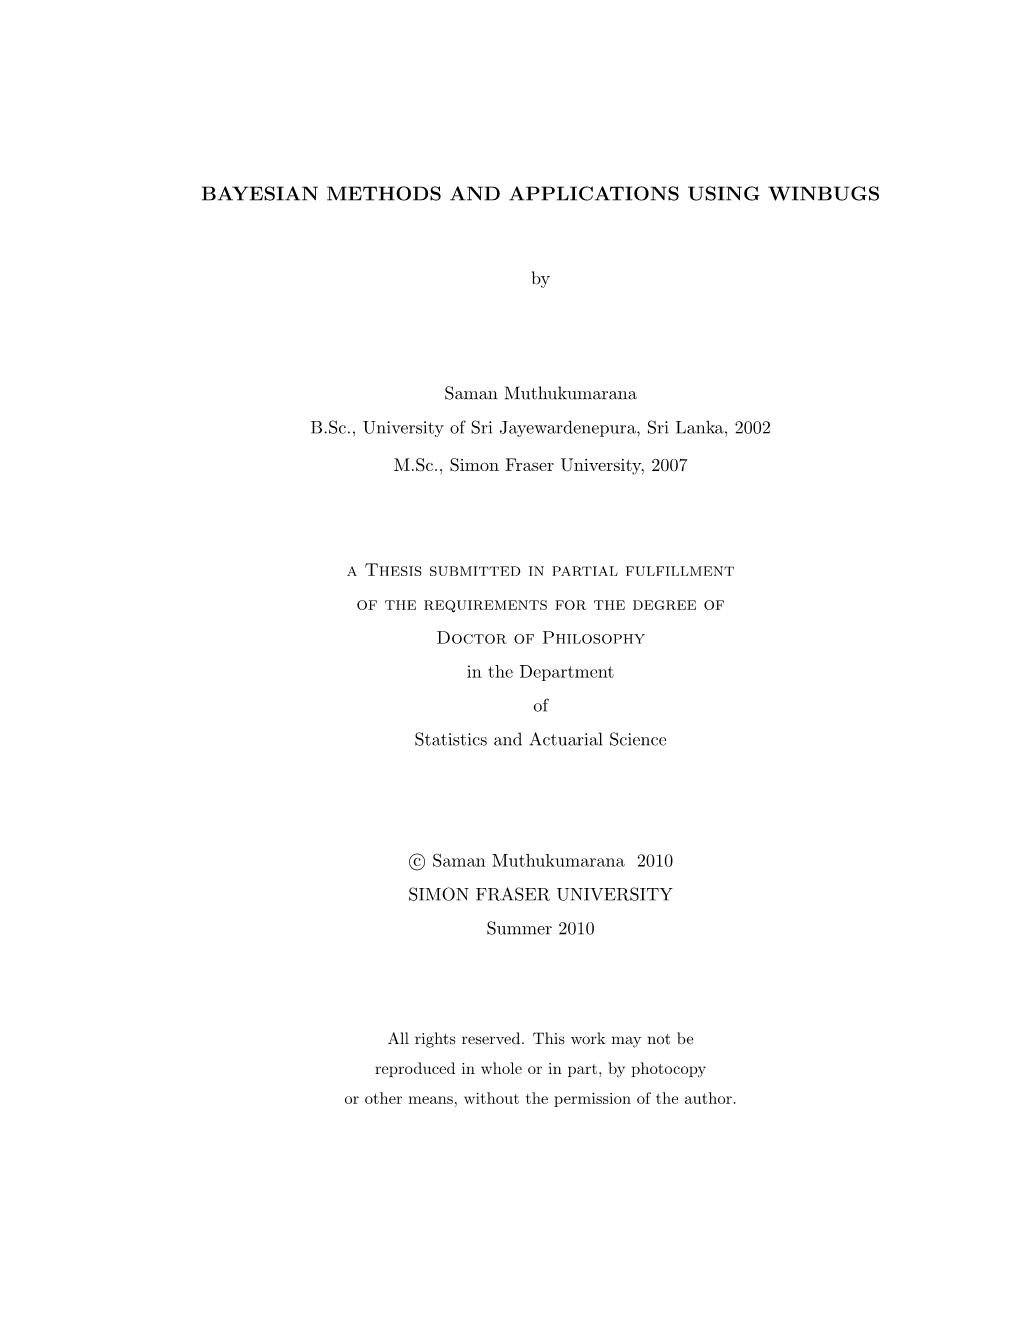 Bayesian Methods and Applications Using Winbugs